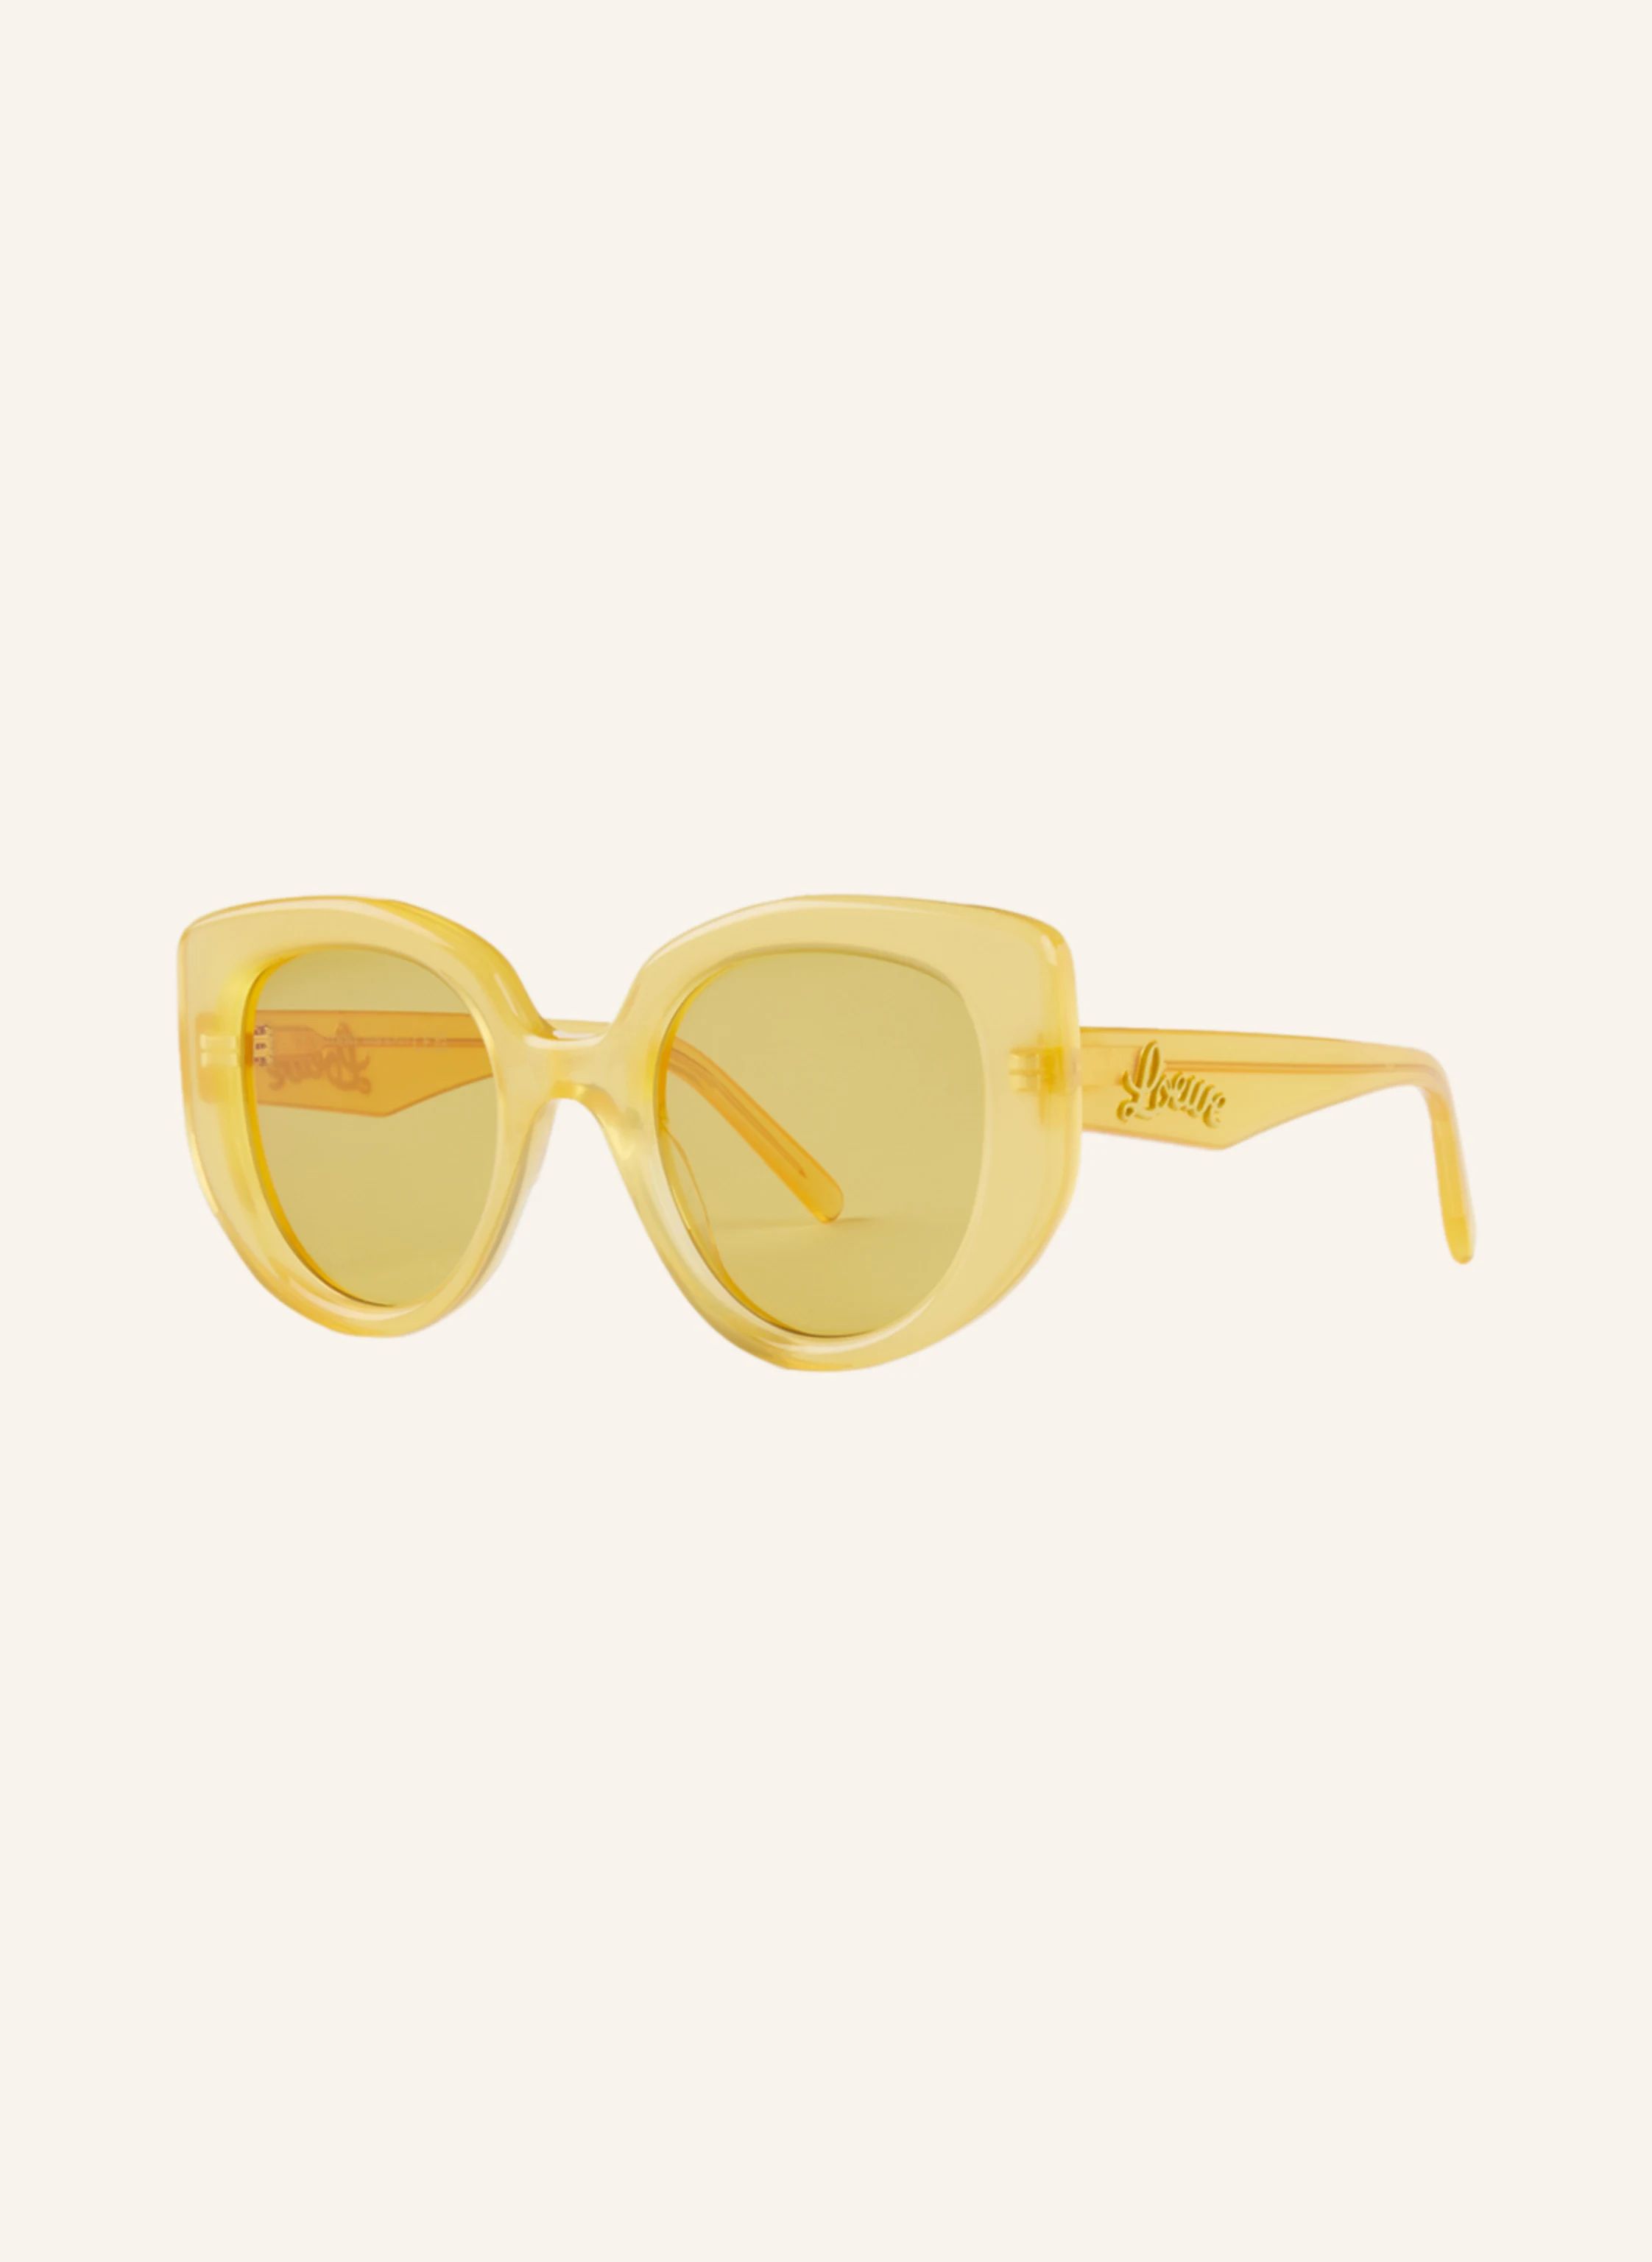 Sonnenbrille | Breuninger (DE/ AT)